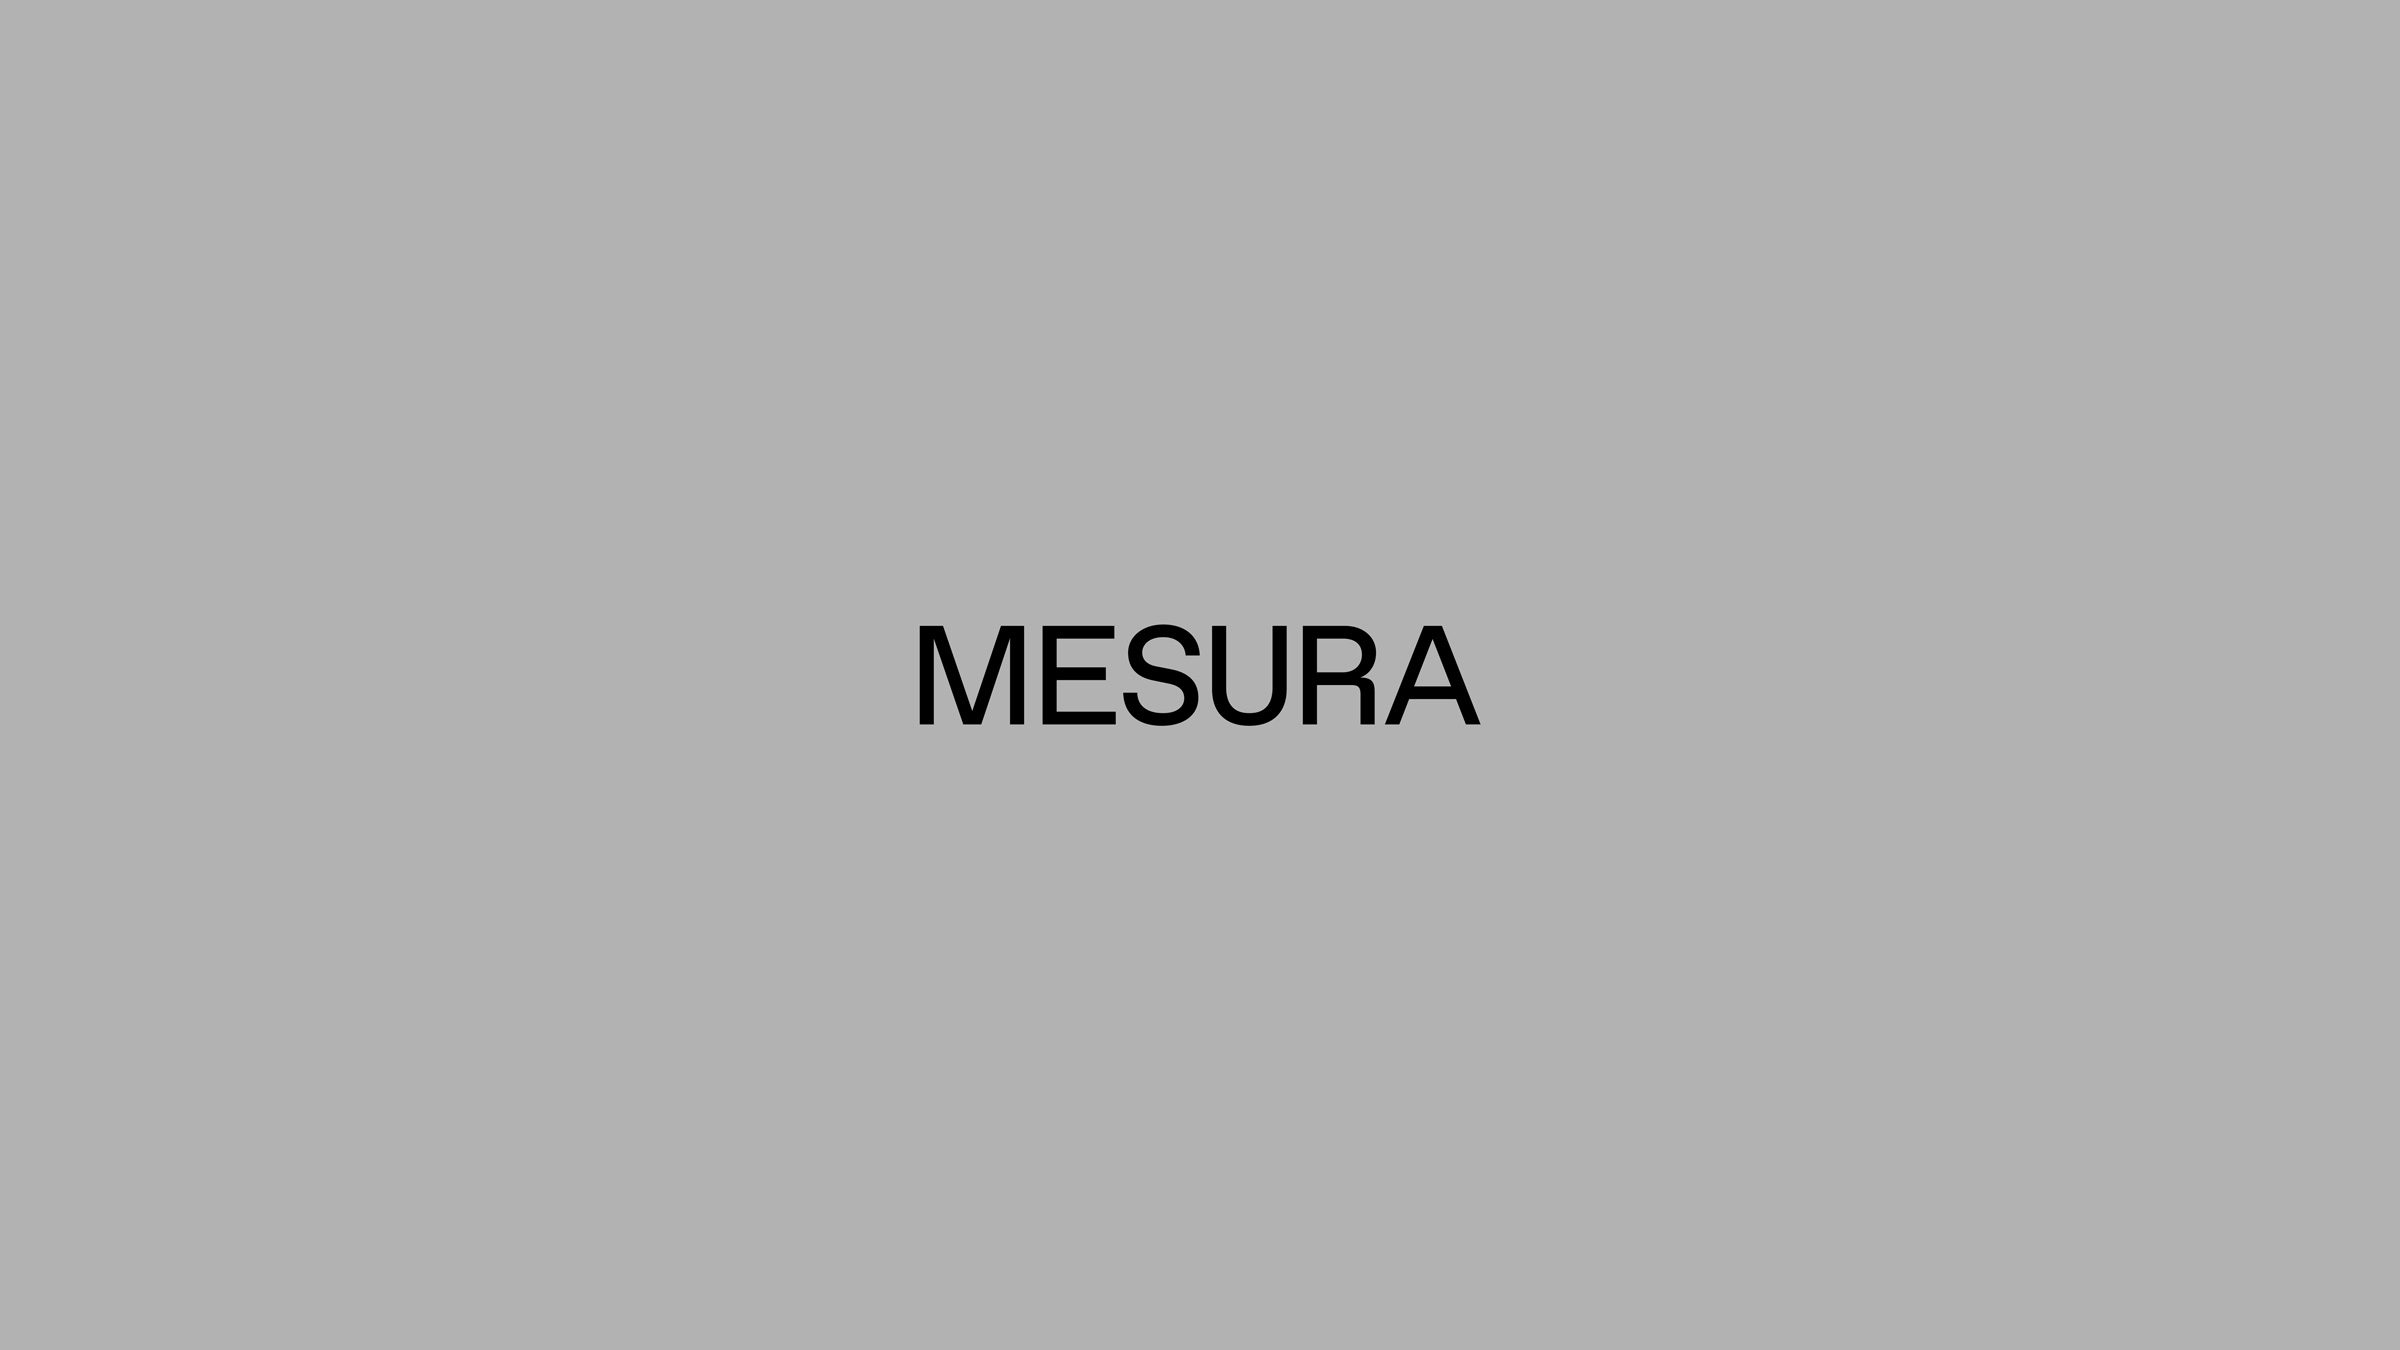 FOLCH - A transversal vision for Mesura